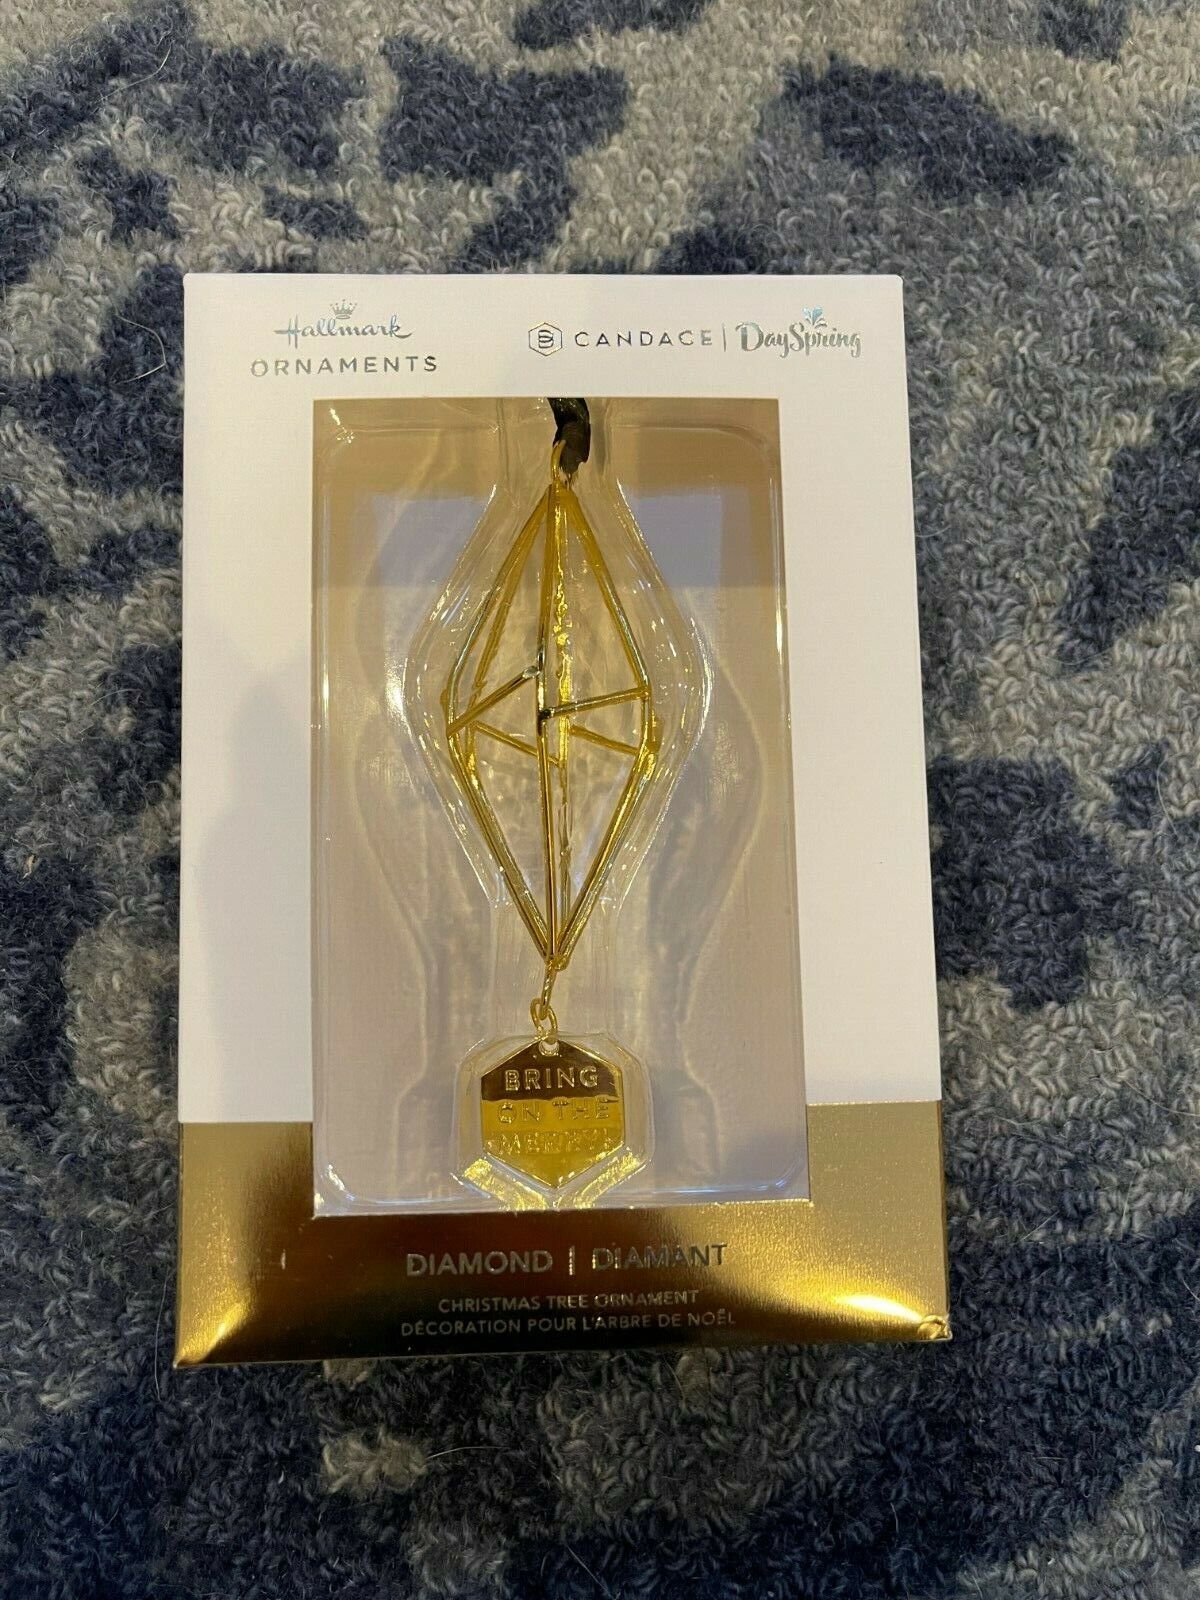 Hallmark Ornament - Diamond - Candace DaySpring - Metal - New in Box - 2021